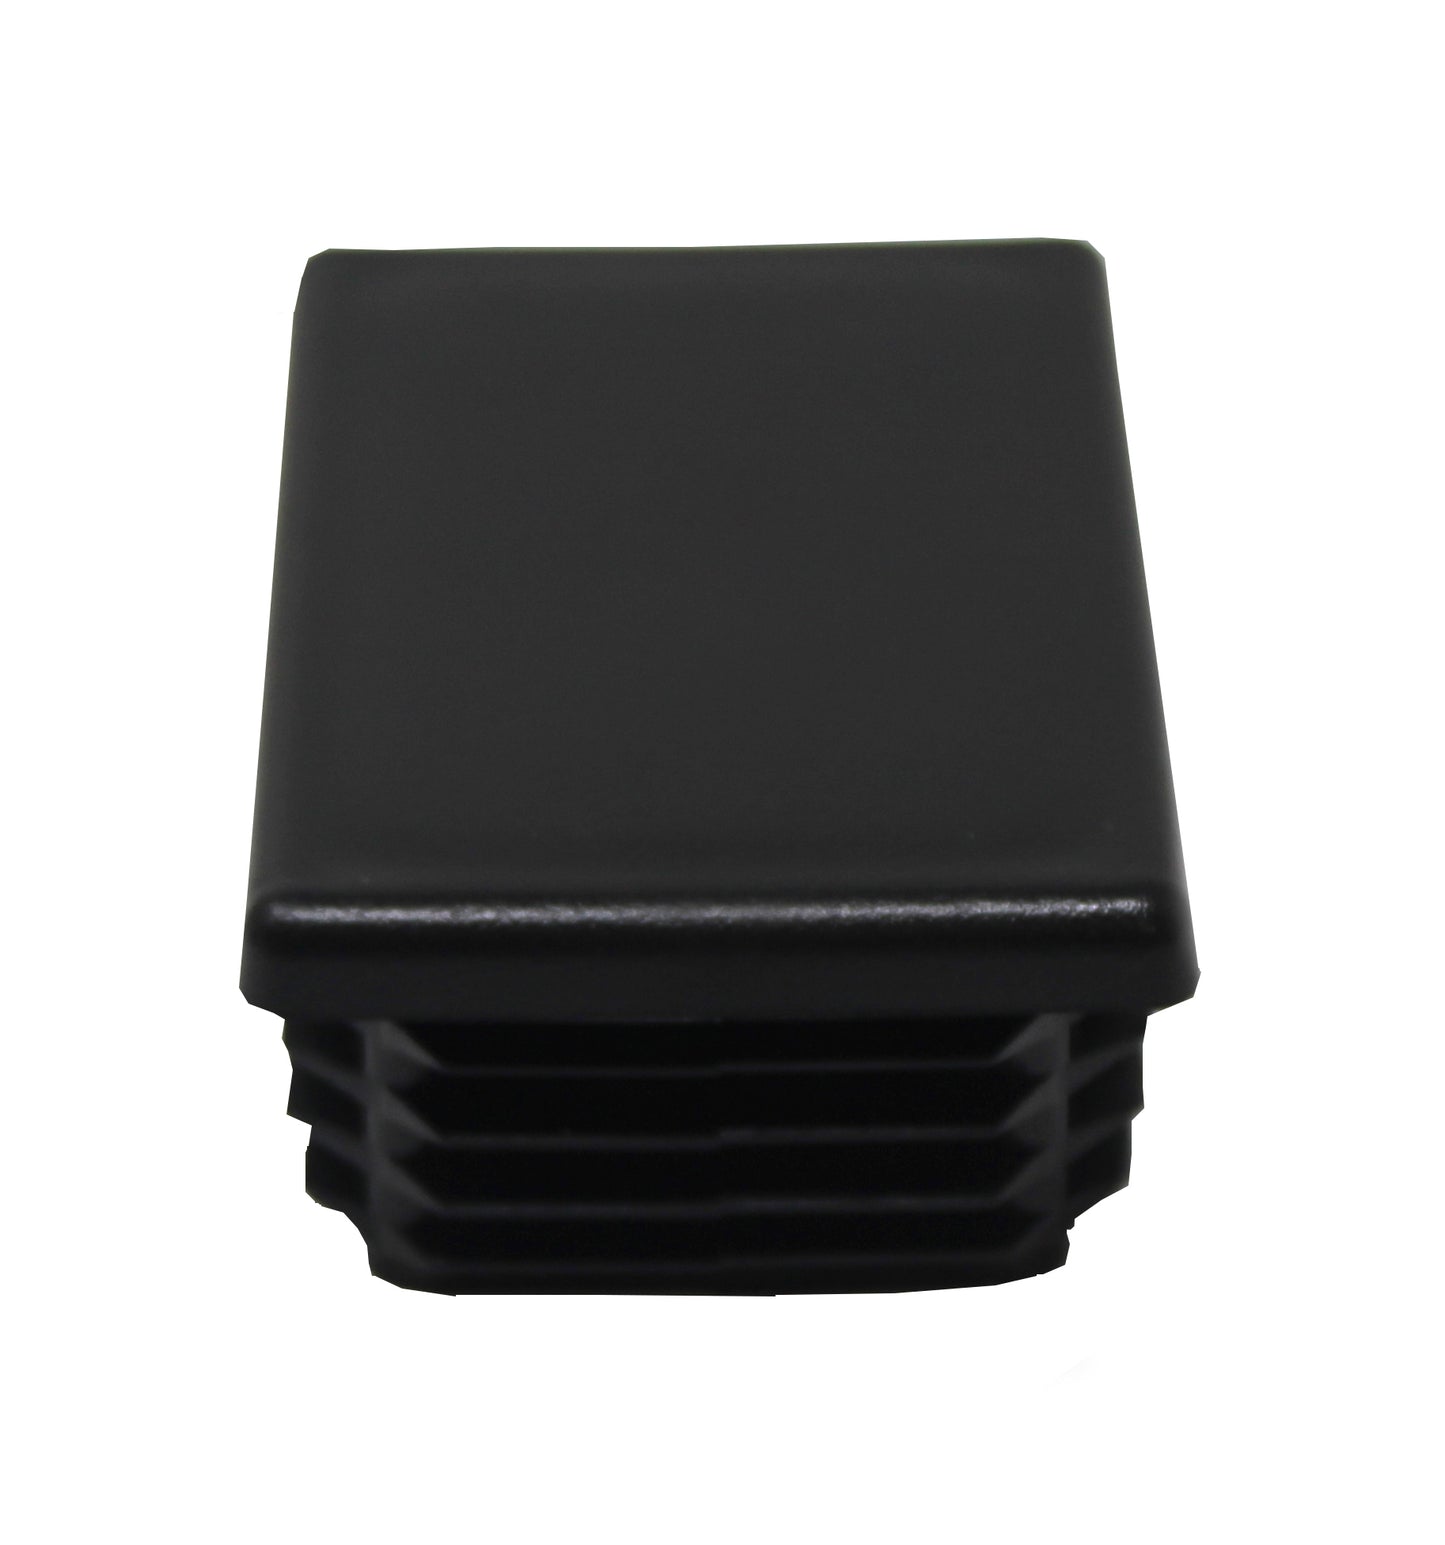 Black Plastic 2"x3 inch Rectangle Tubing End Cap Plug Insert, Finishing Plug, Pipe End Cap, Durable Chair Glide Universal